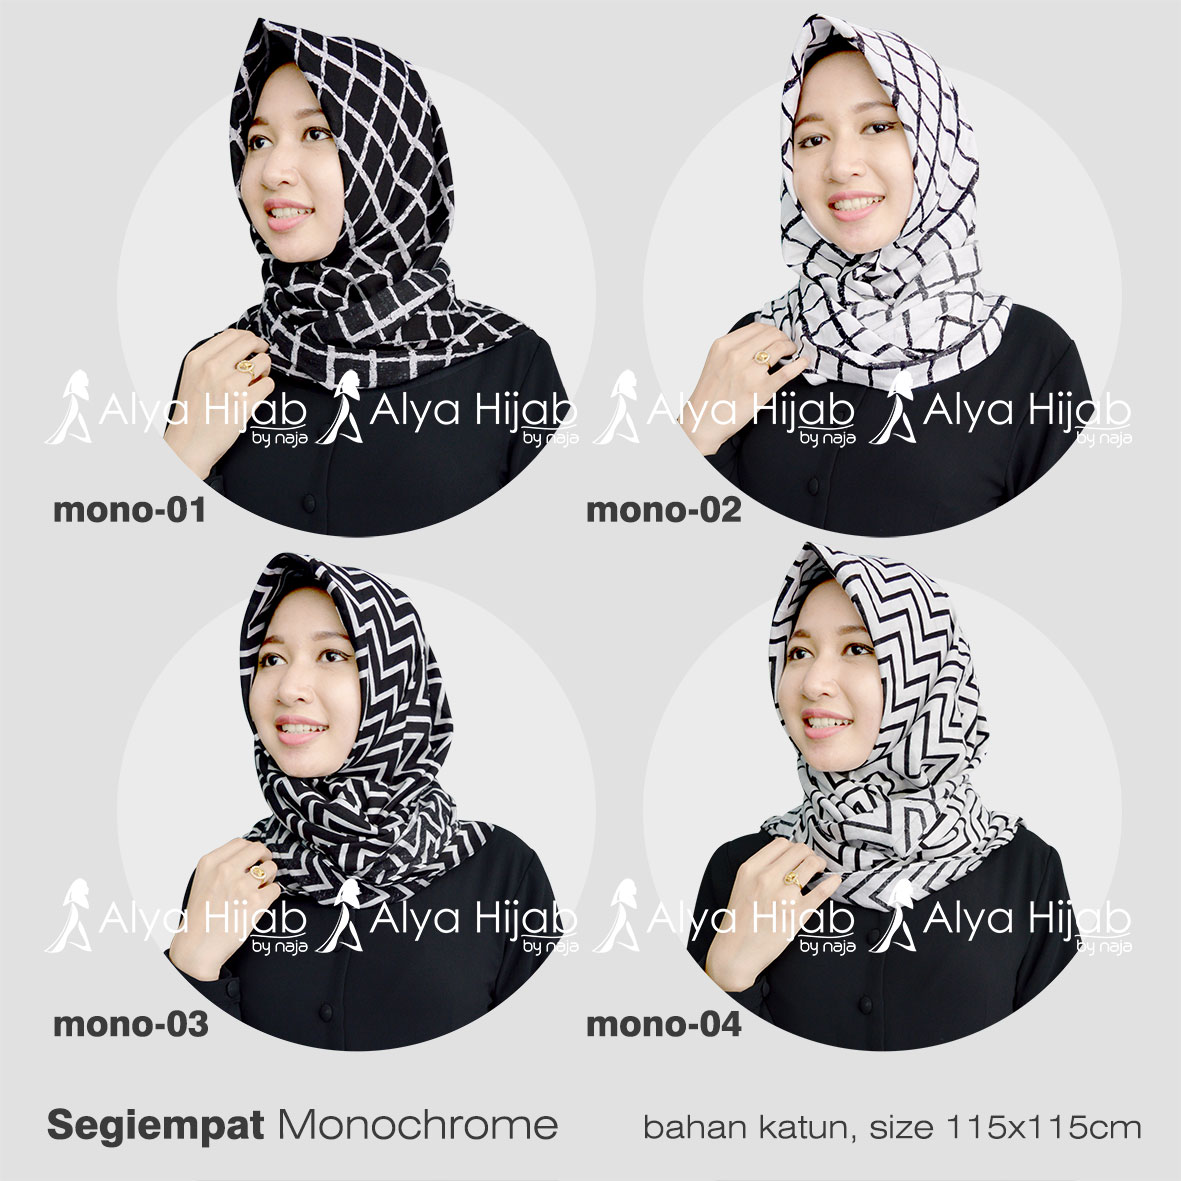 24 Ide Tutorial Hijab Indonesia Segi Empat Motif Untuk Kamu Tutorial Hijab Indonesia